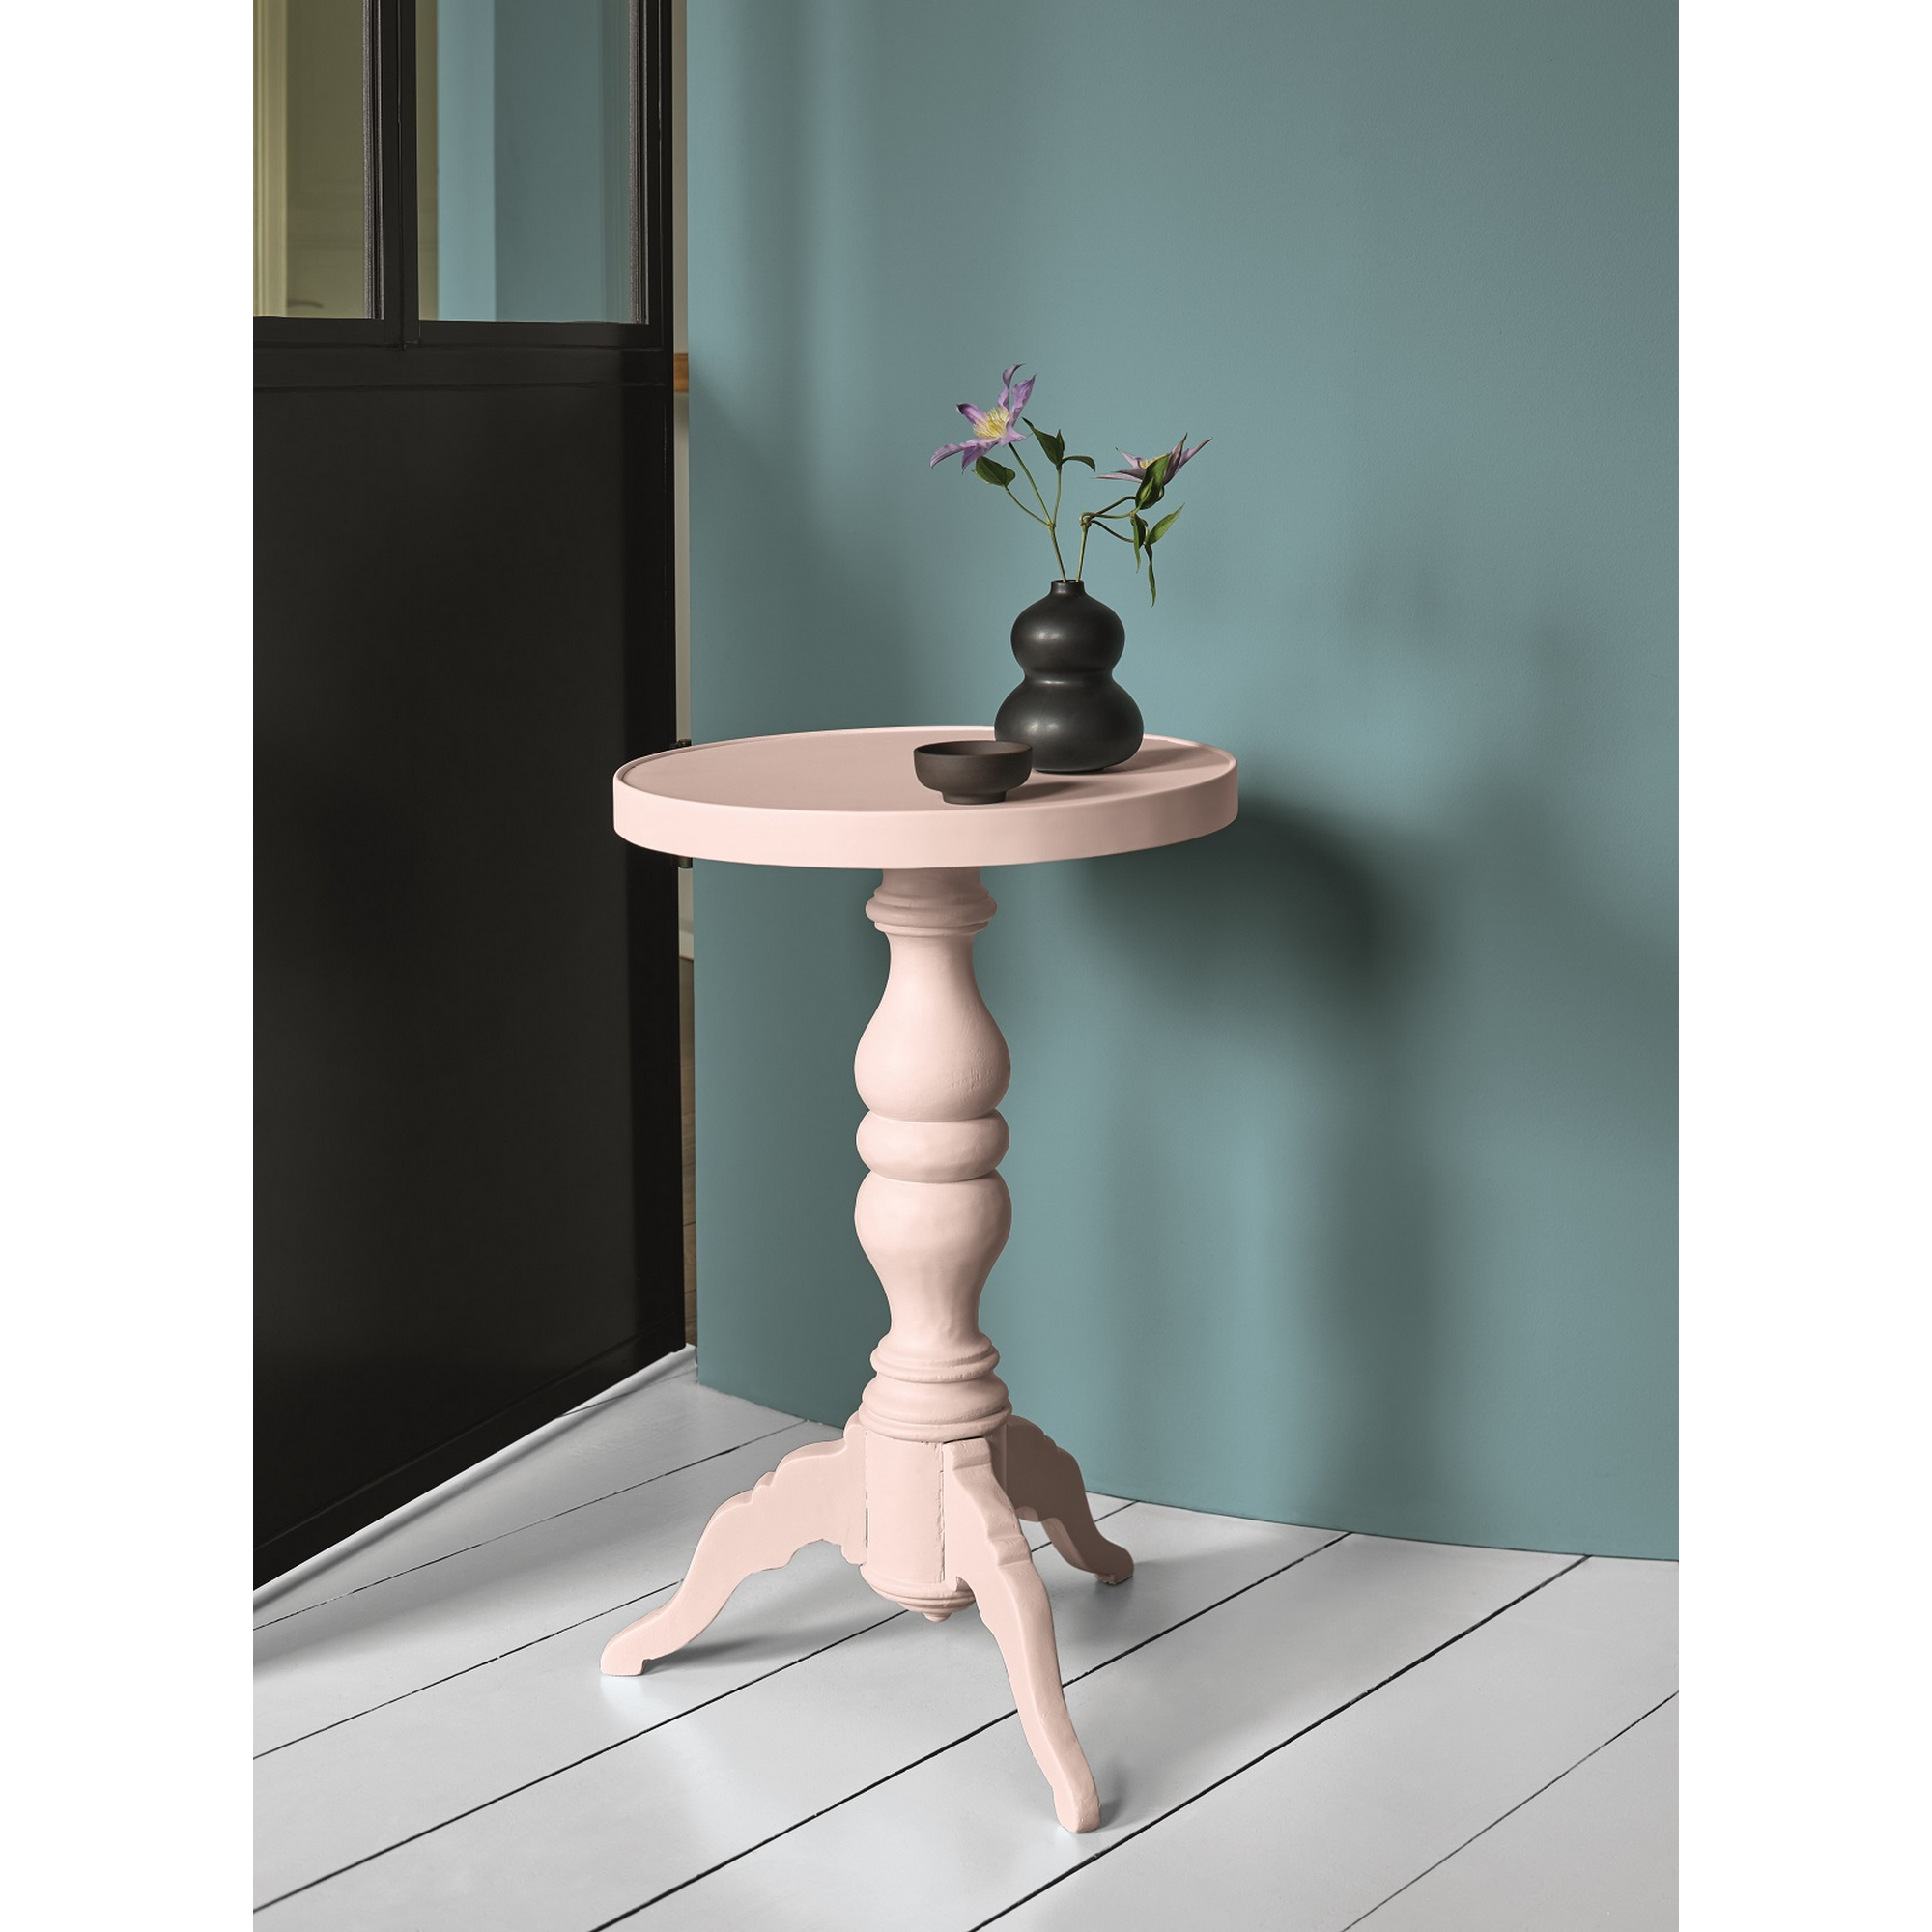 Feine Farben 'Zarte Romantik' pastellrosa matt 750 ml + product picture